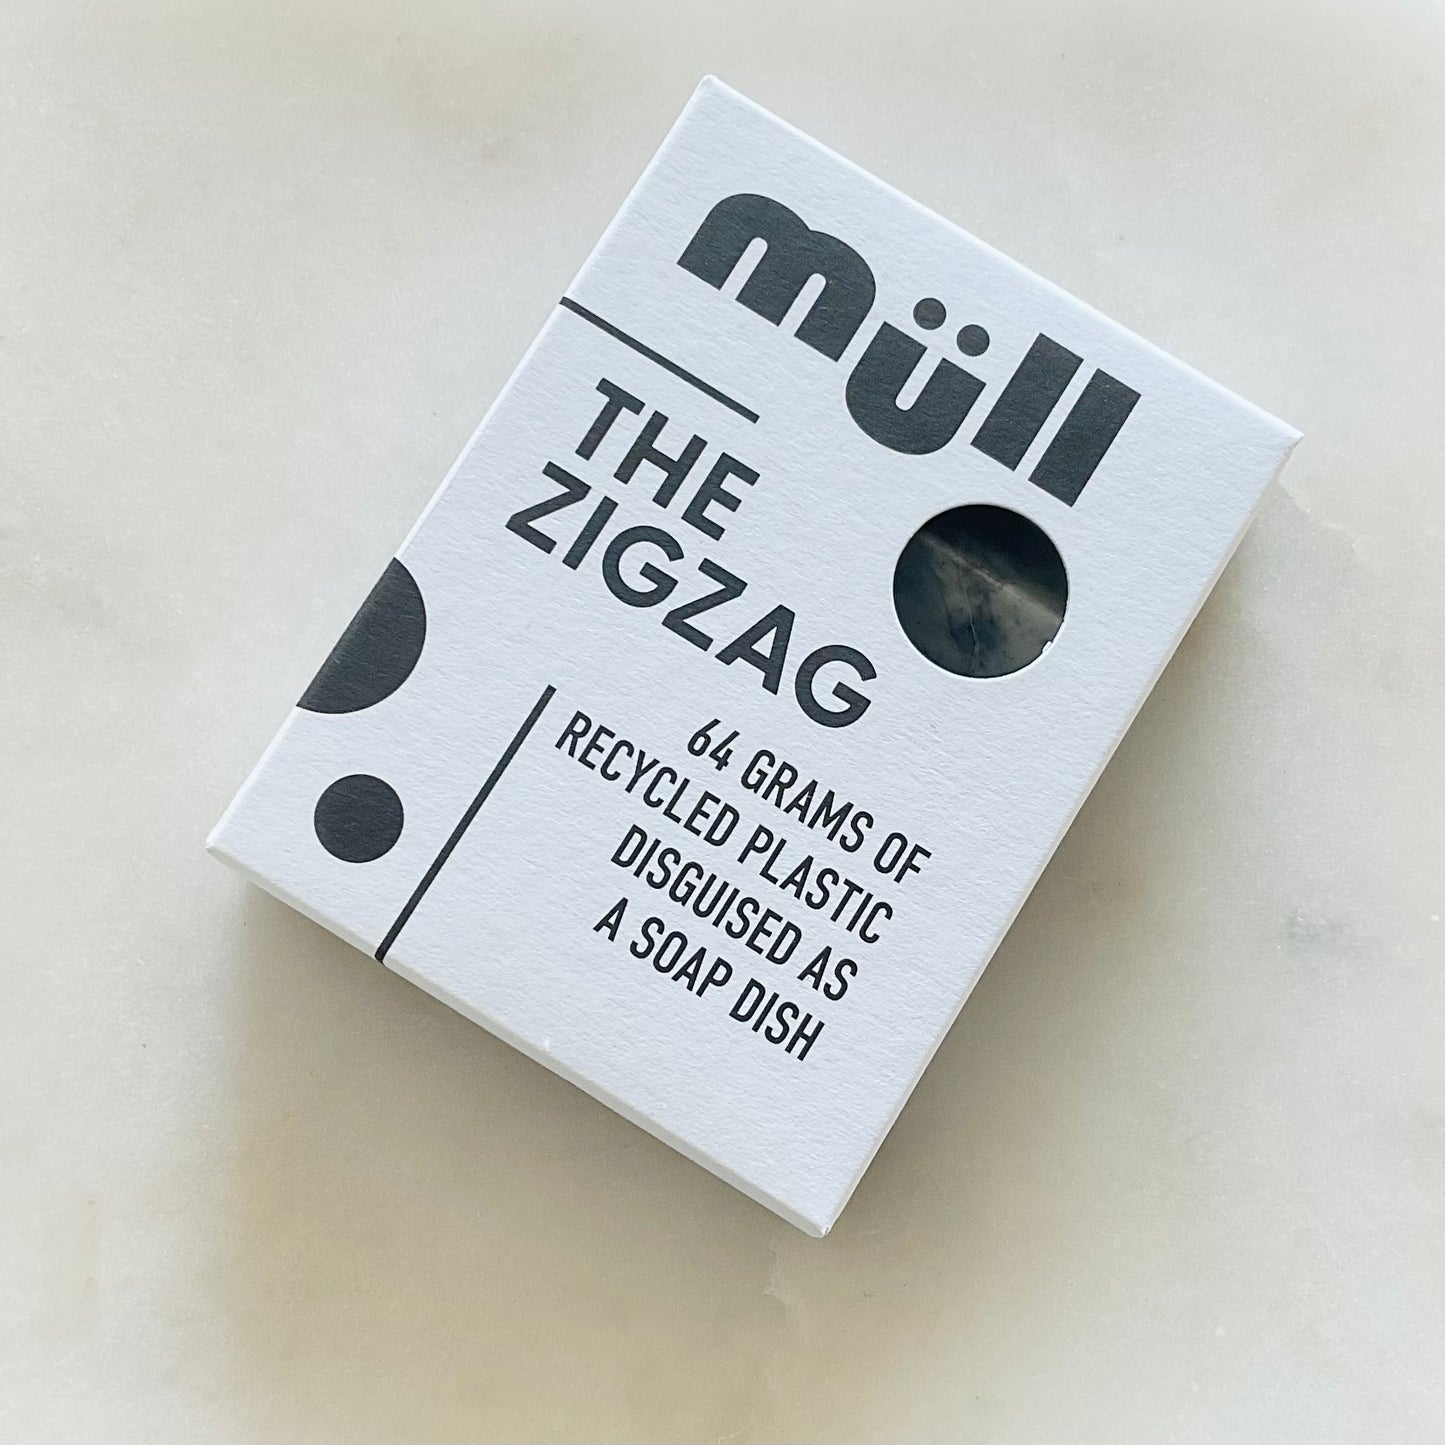 Zig zag soap dish by mull club (Lurpak) - Bean and Bee